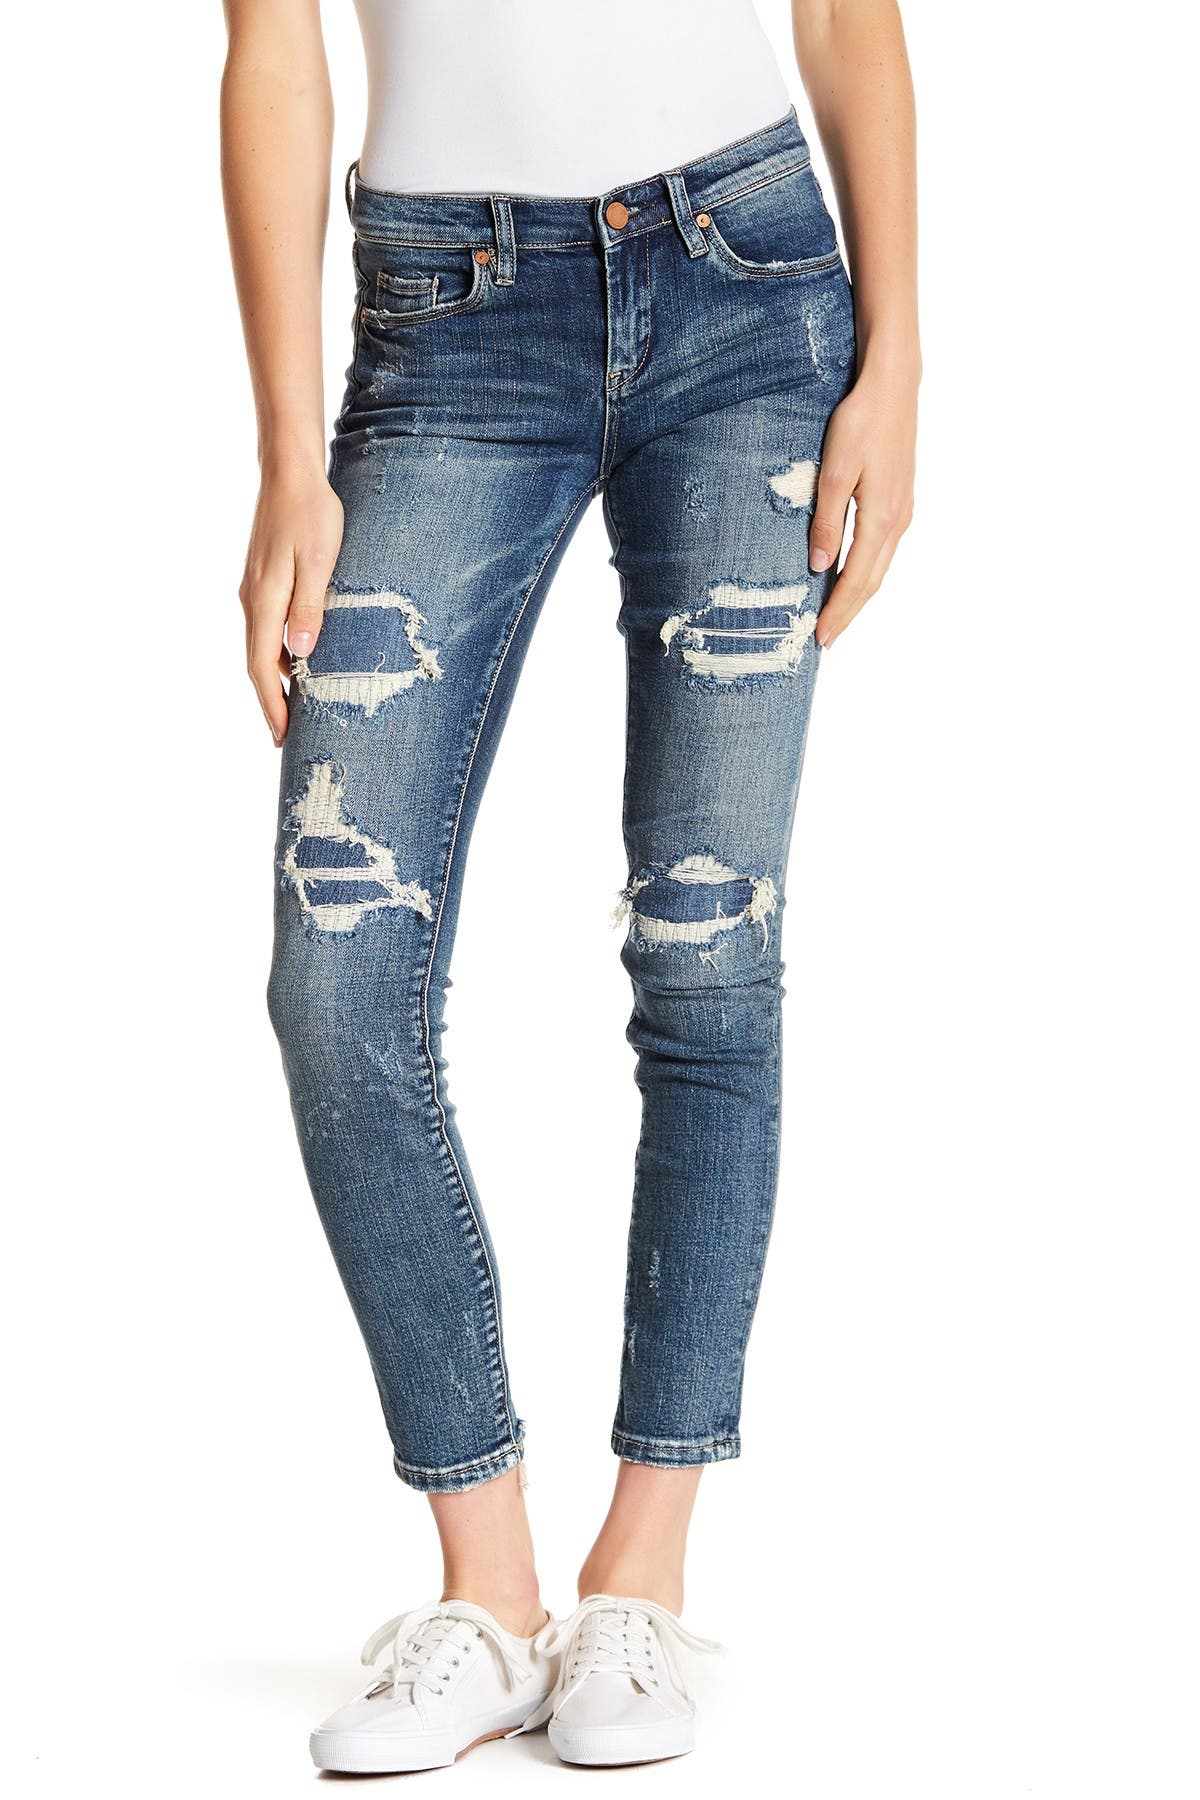 high waist jeans price